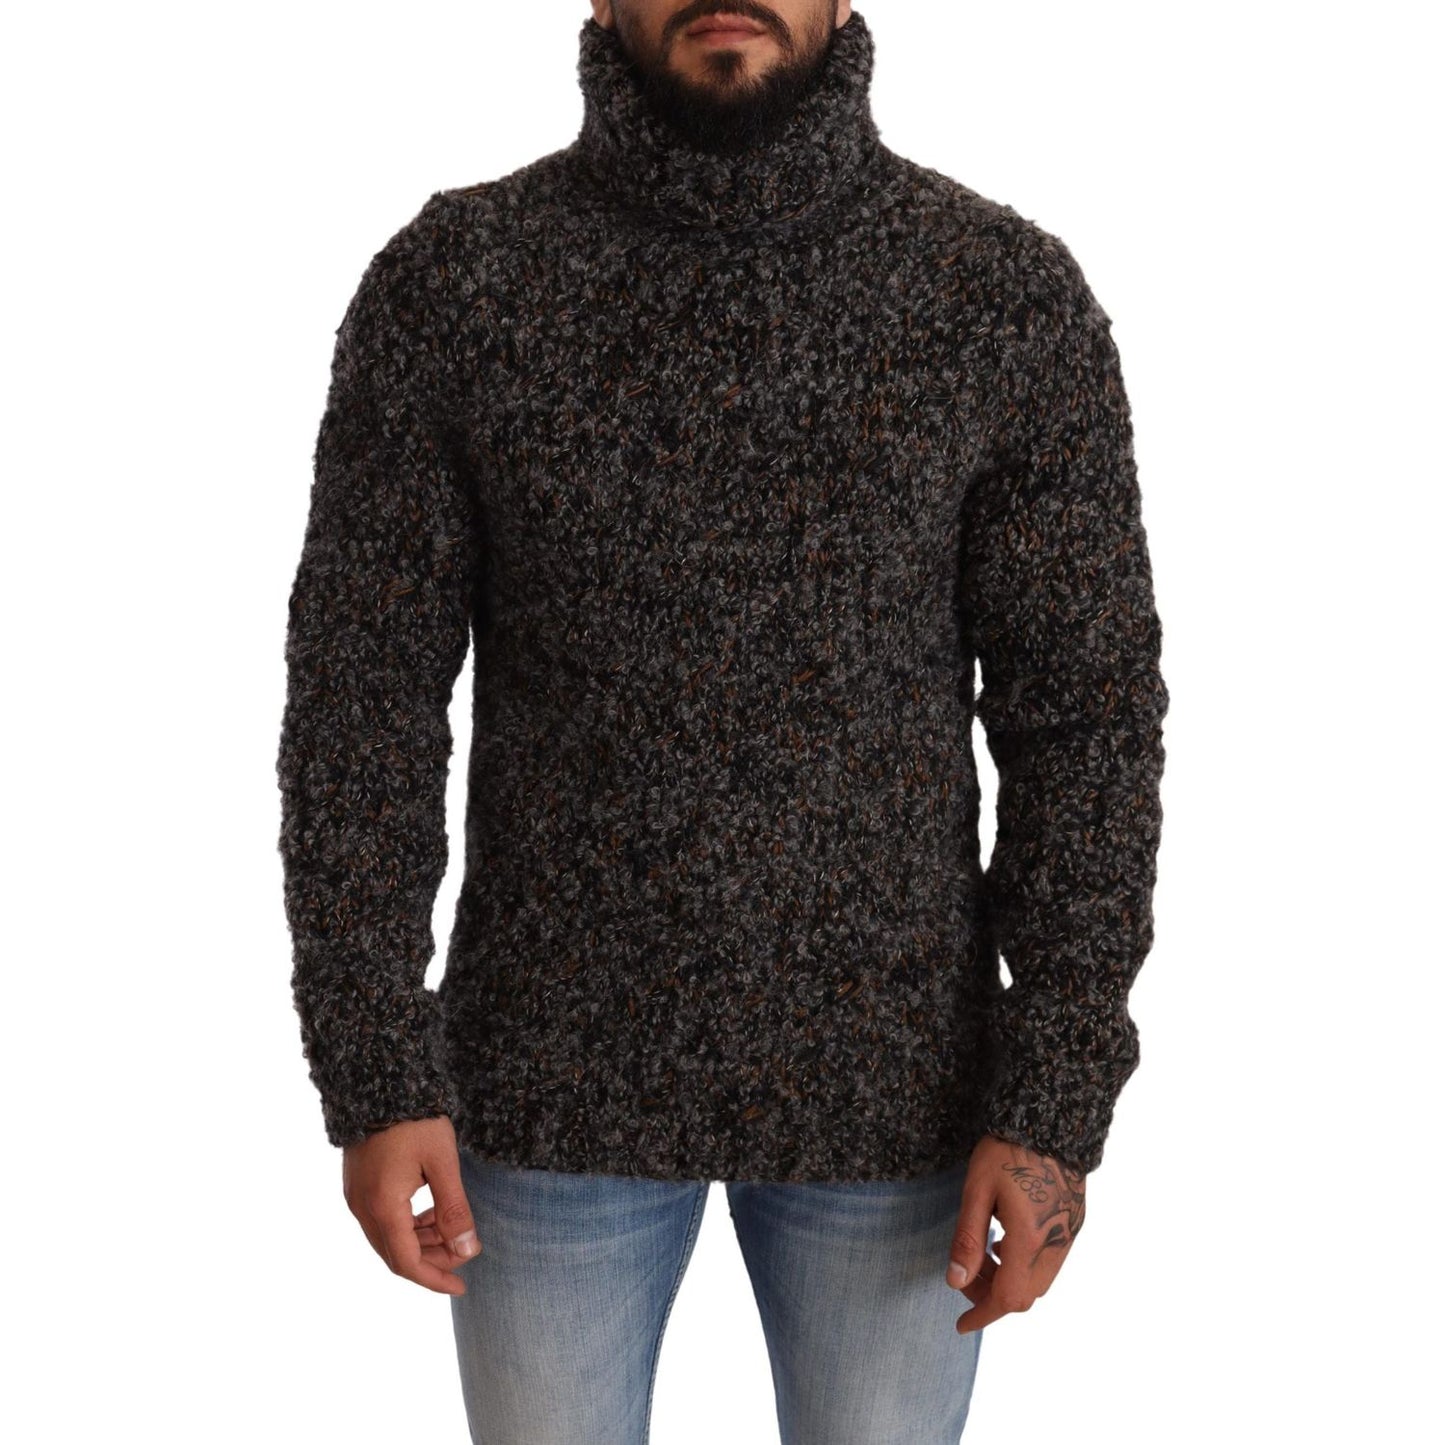 Dolce & Gabbana Elegant Speckled Turtleneck Wool-Blend Sweater MAN SWEATERS gray-wool-blend-turtleneck-pullover-sweater IMG_4847-scaled-347a2b45-2f7.jpg